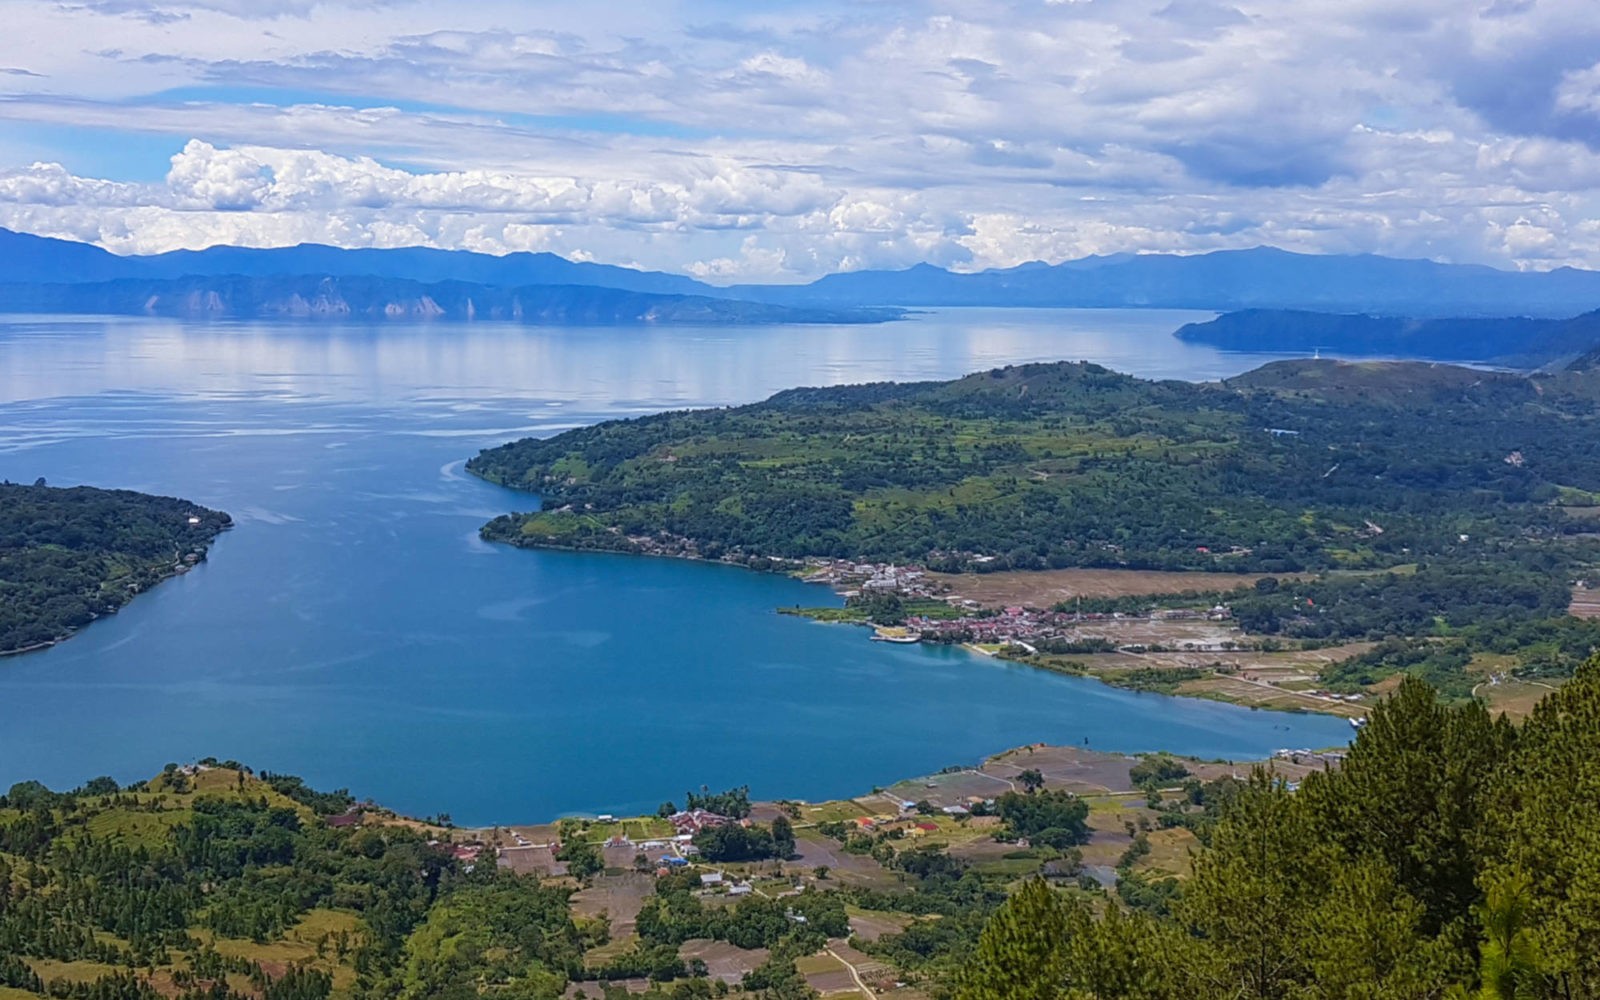 Pemandangan danau toba dari Geopark Sipinsur